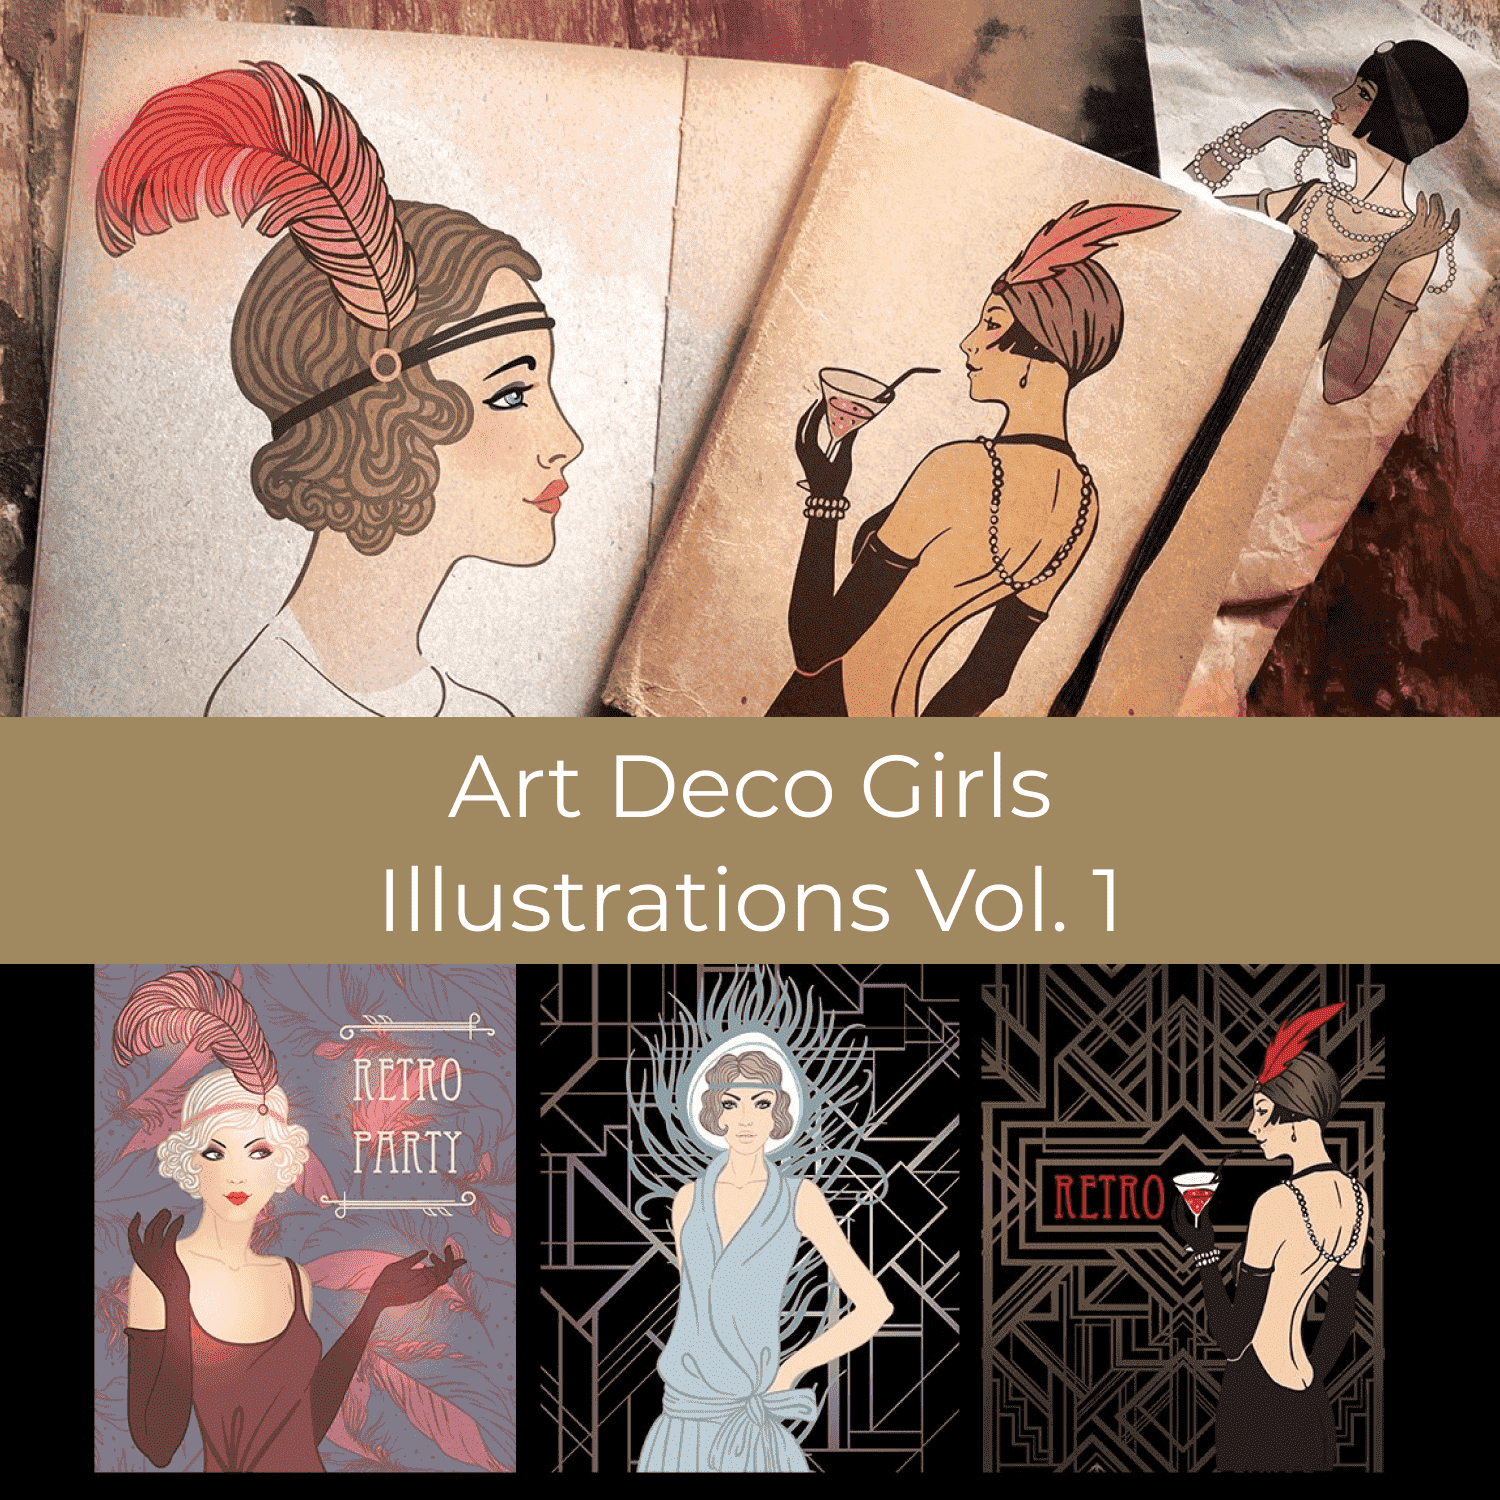 Art Deco Girls Illustrations Vol. 1 preview image.